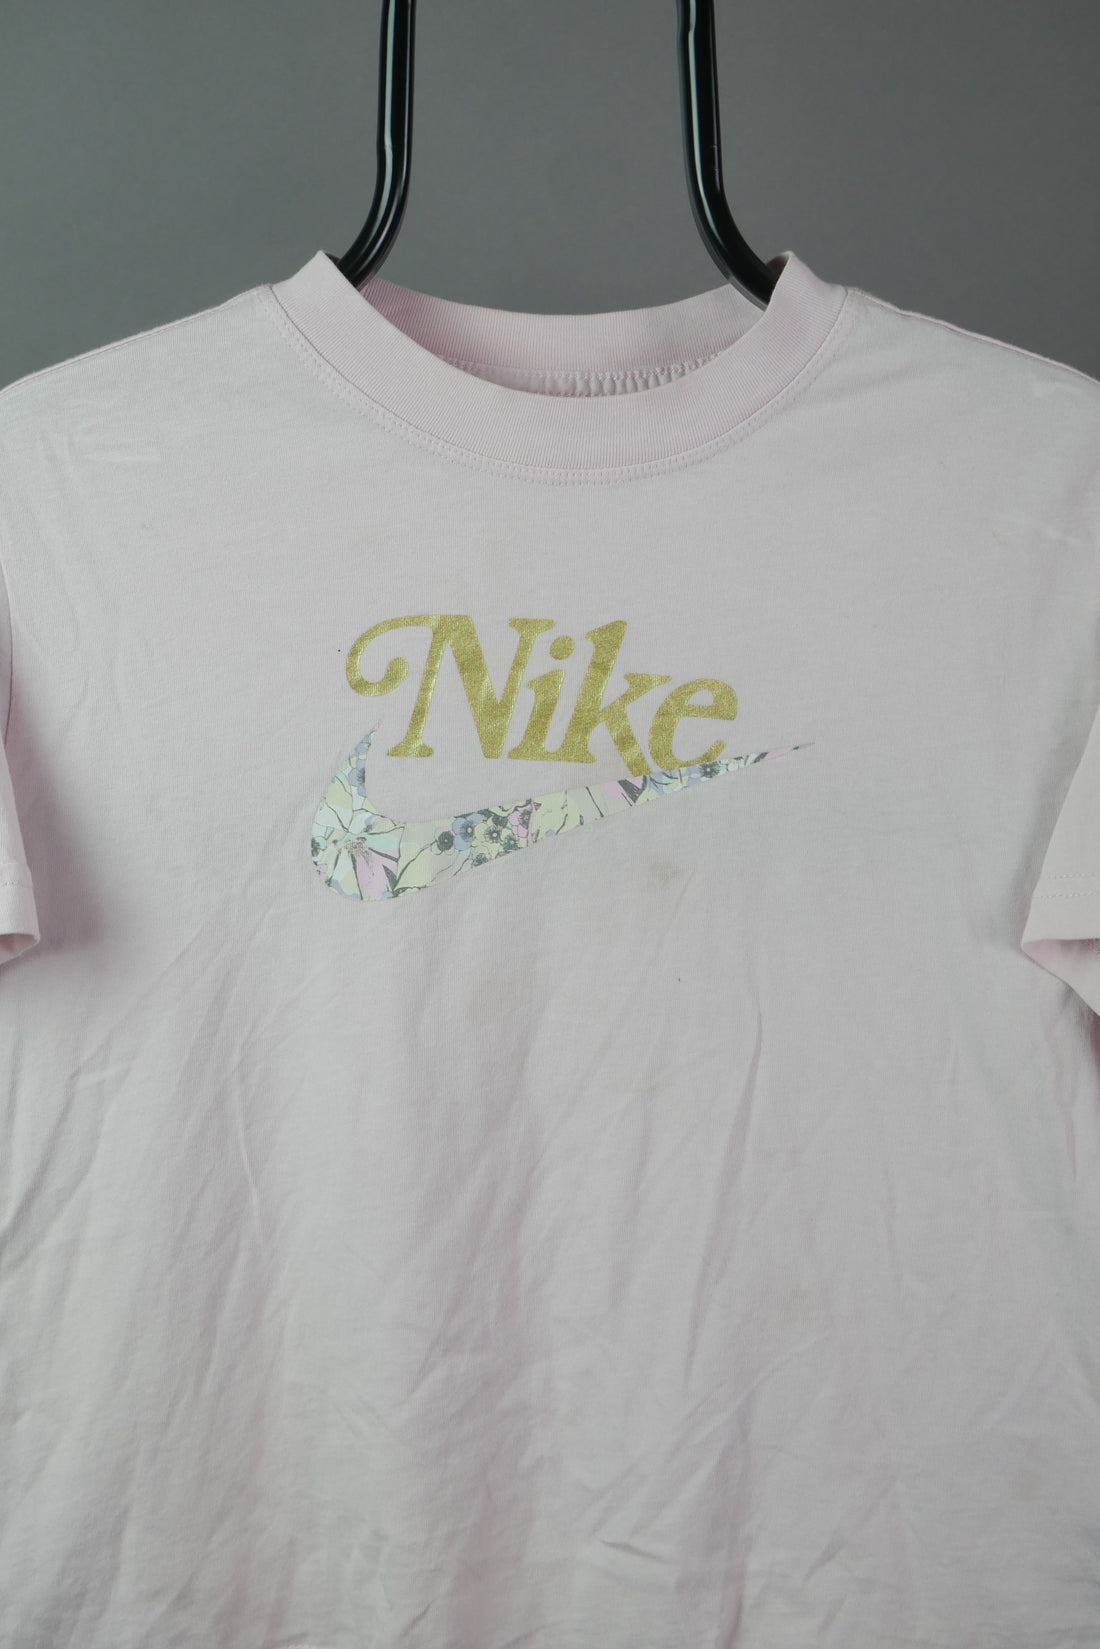 The Nike Cropped T-Shirt (Women's L)